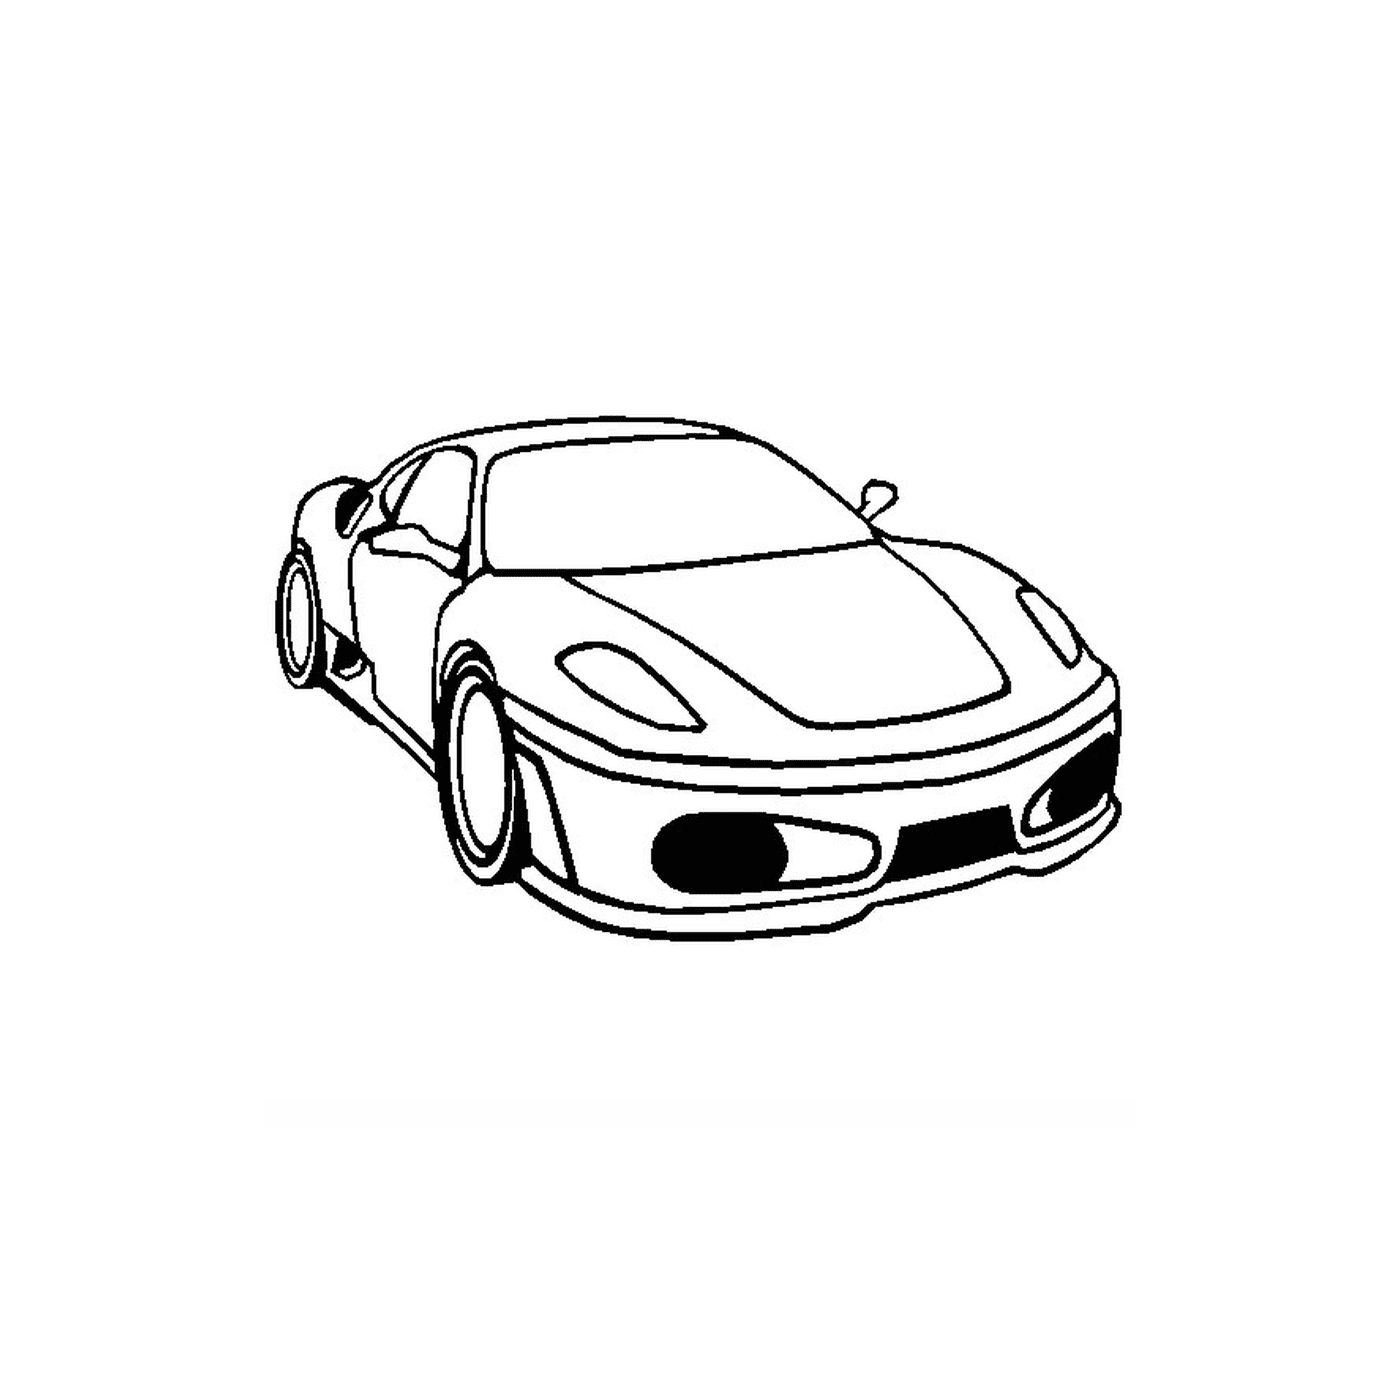  Ferrari car f430 